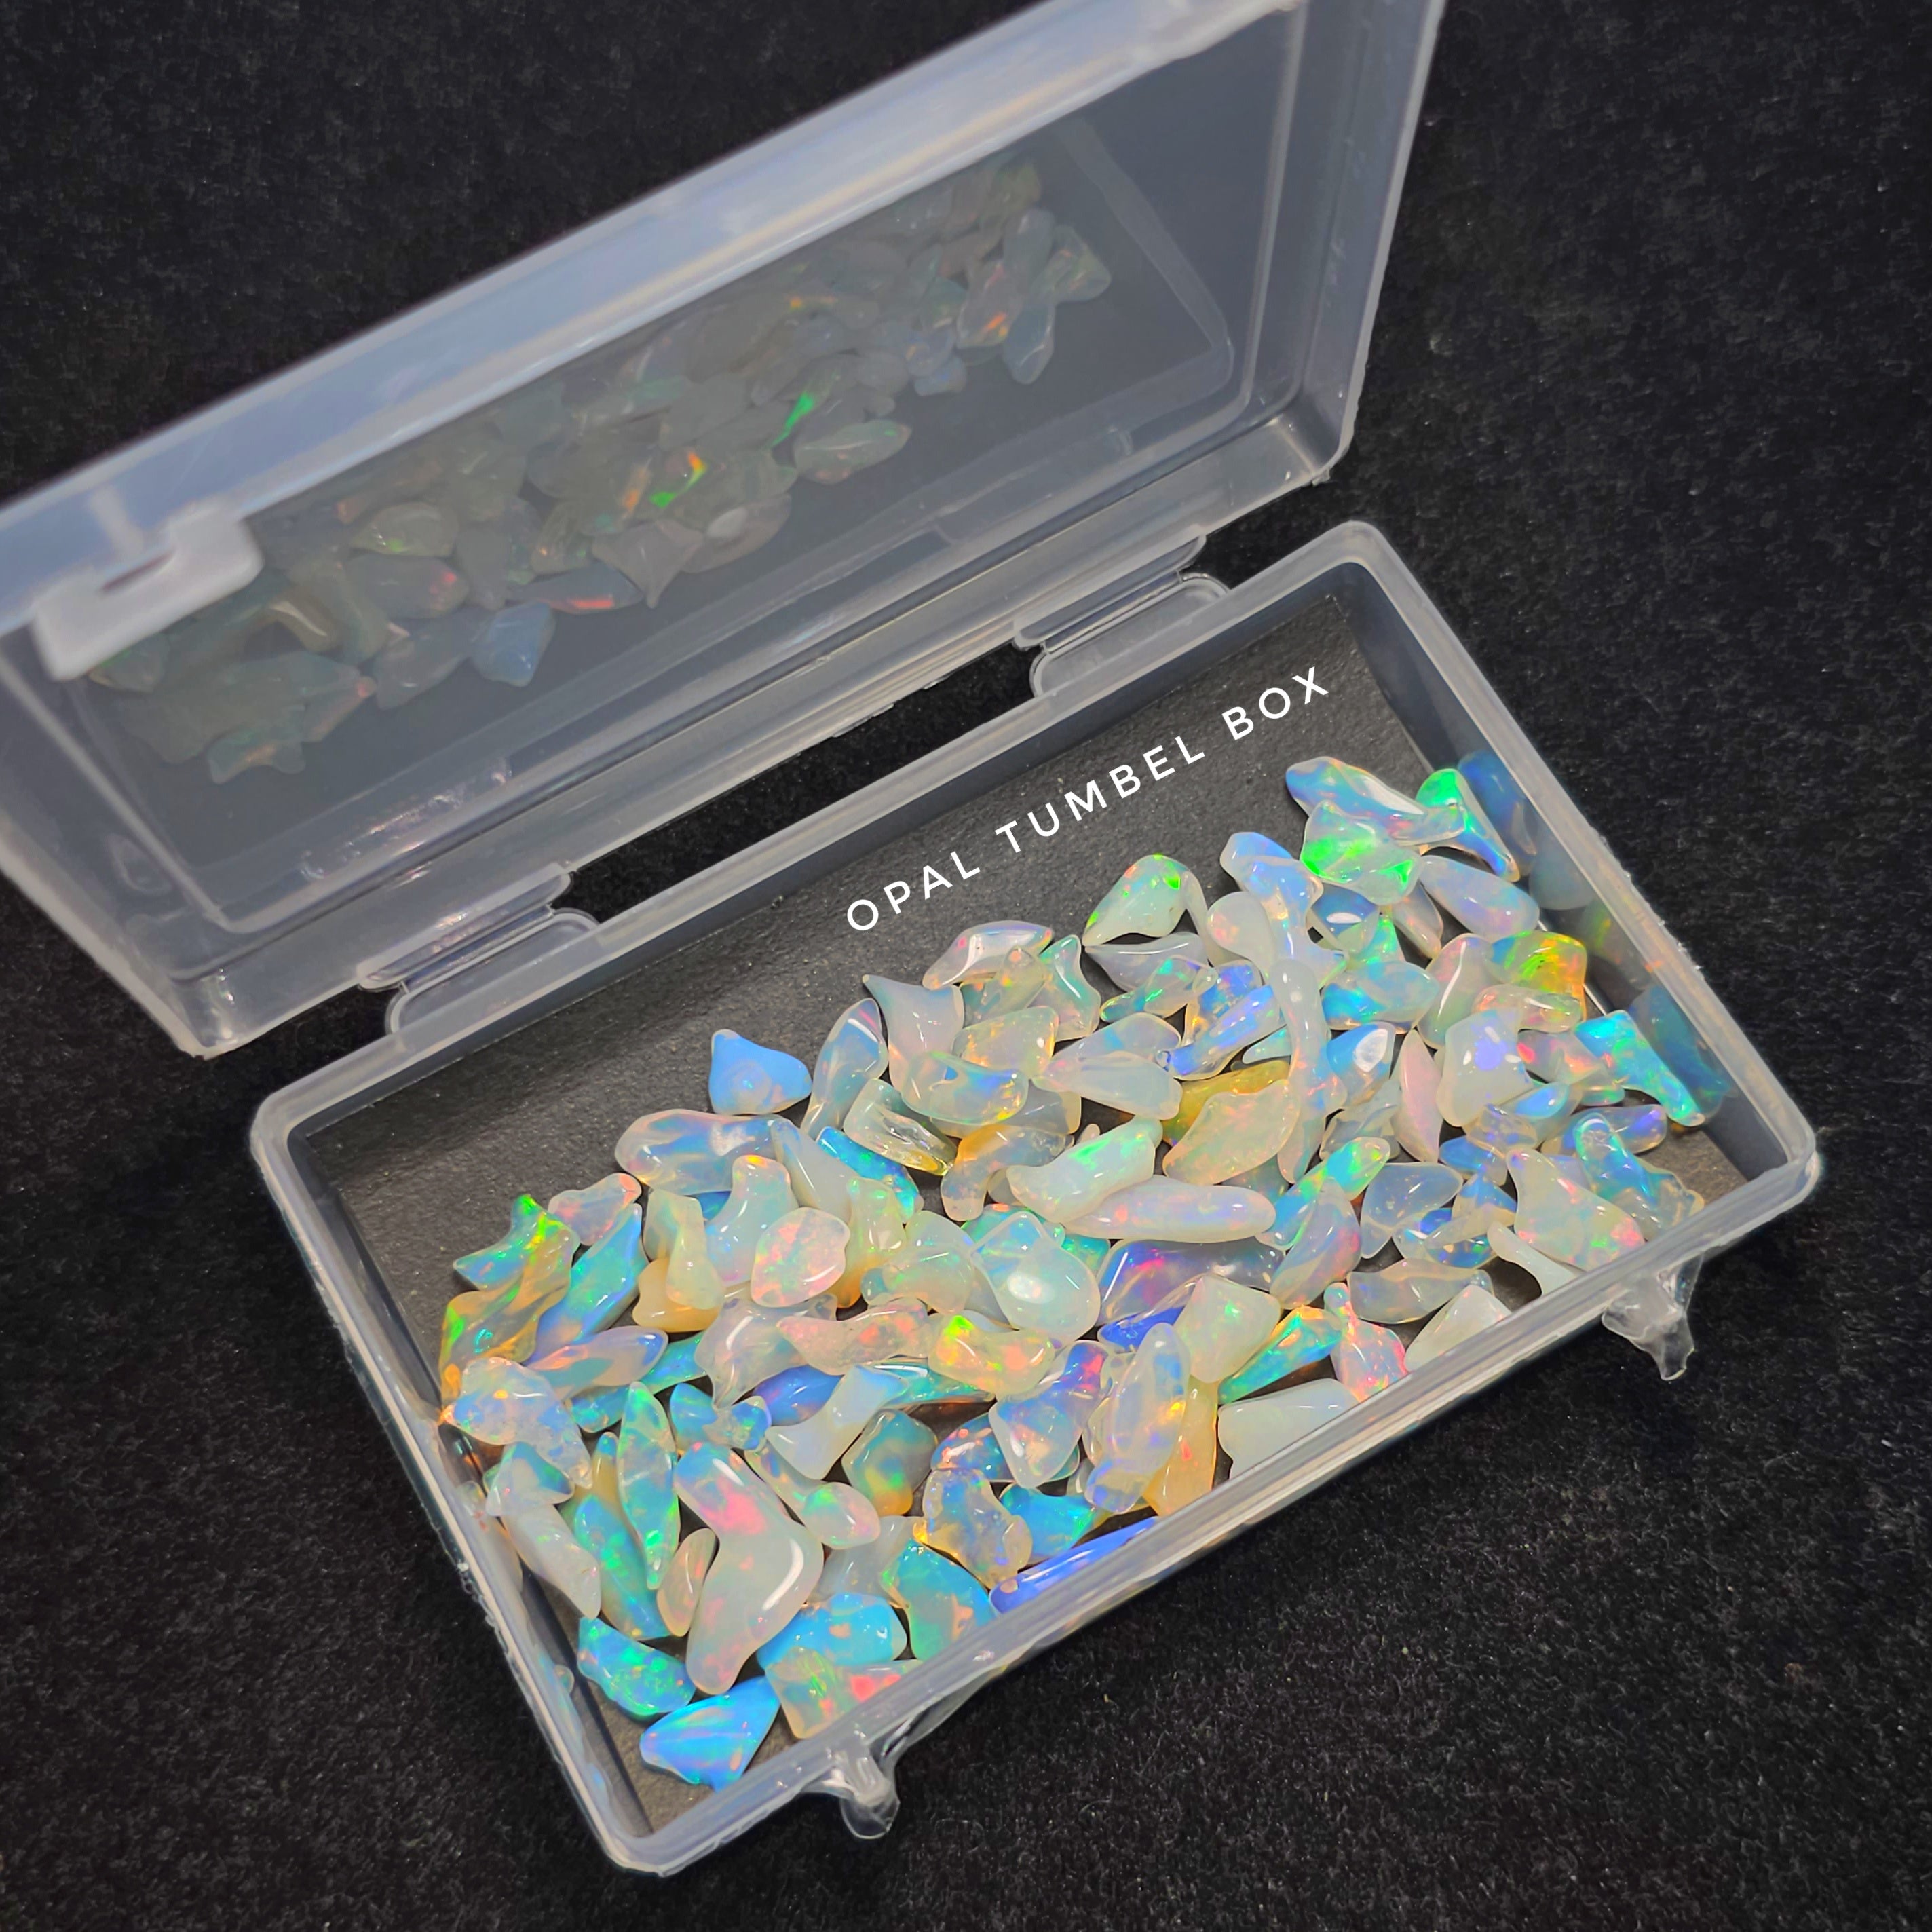 Polished Opal tumbels Box | 5-10mm | 70 Pcs - The LabradoriteKing